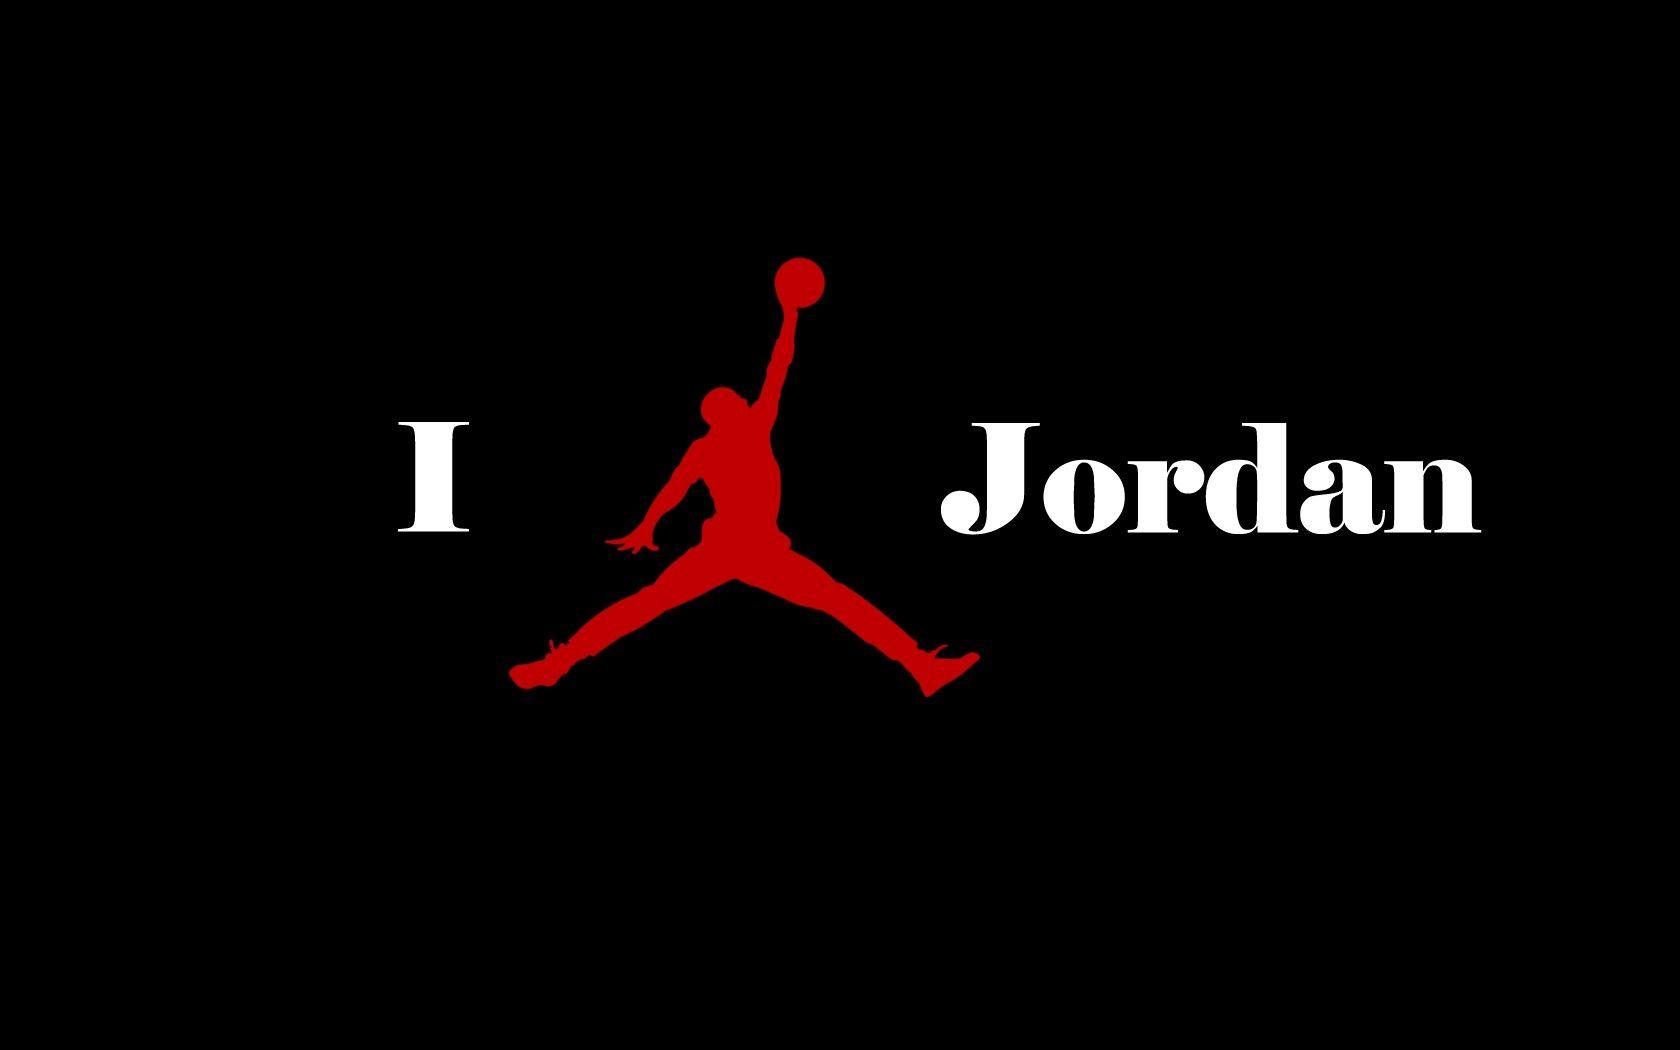 Michael Jordan Logo 84 117134 Image HD Wallpaper. Wallfoy.com